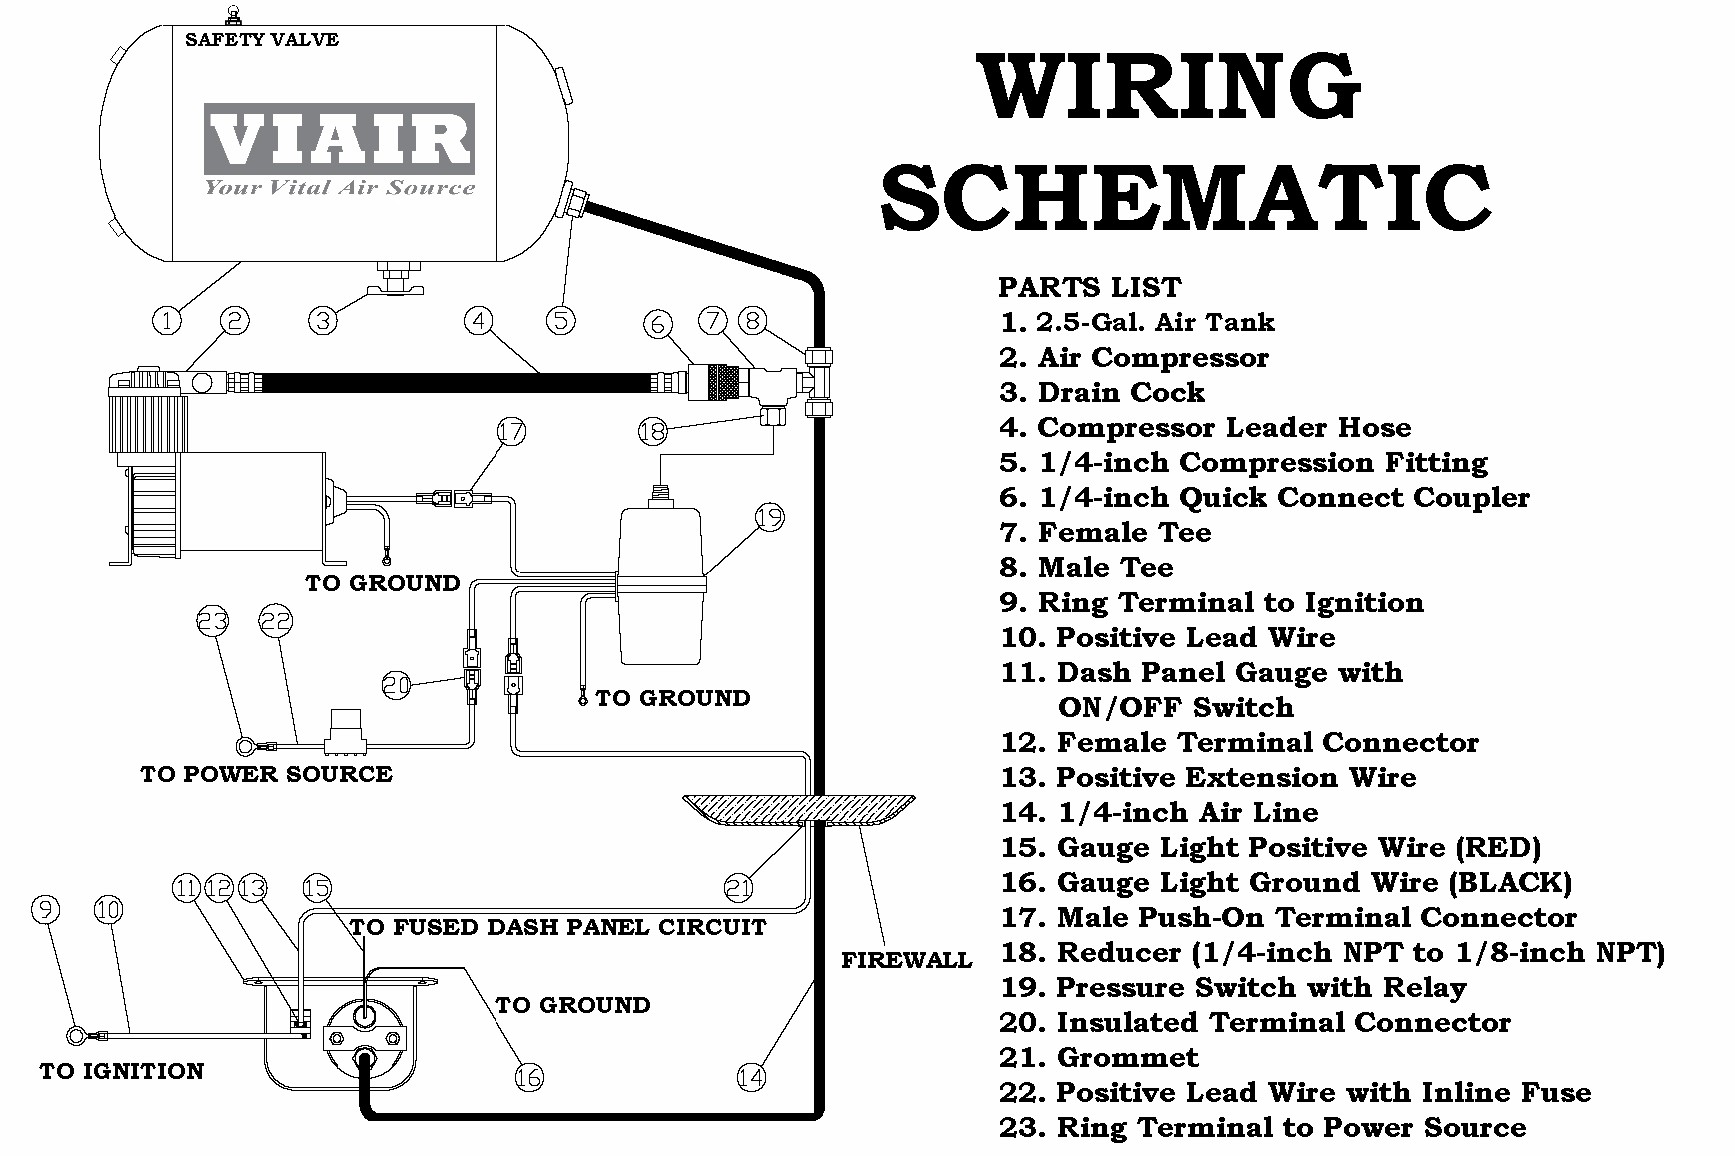 Bad Boy Horn Wiring Diagram Air Horn Wiring Diagram Installation Instructions Of Bad Boy Horn Wiring Diagram